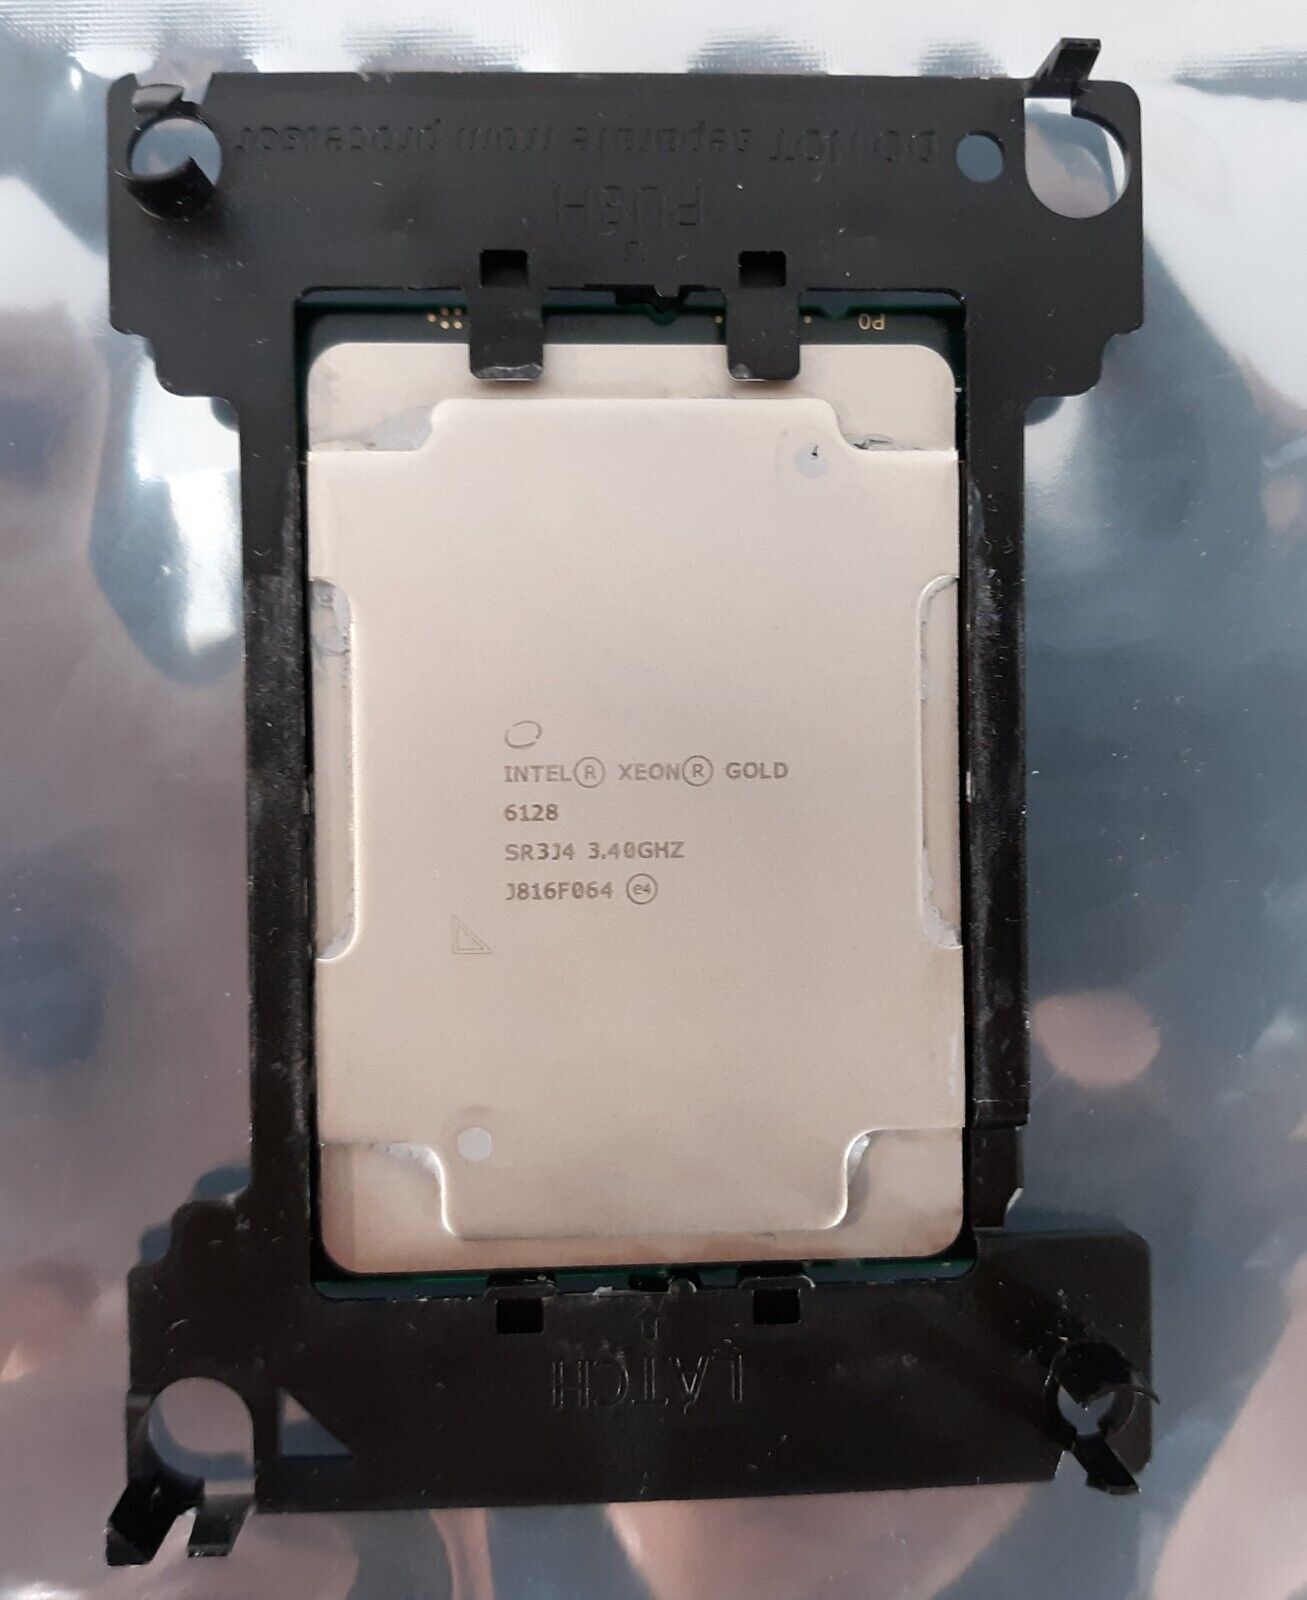 Intel Xeon Gold 6128 SR334 3.40GHz Server Processor w/ Bracket